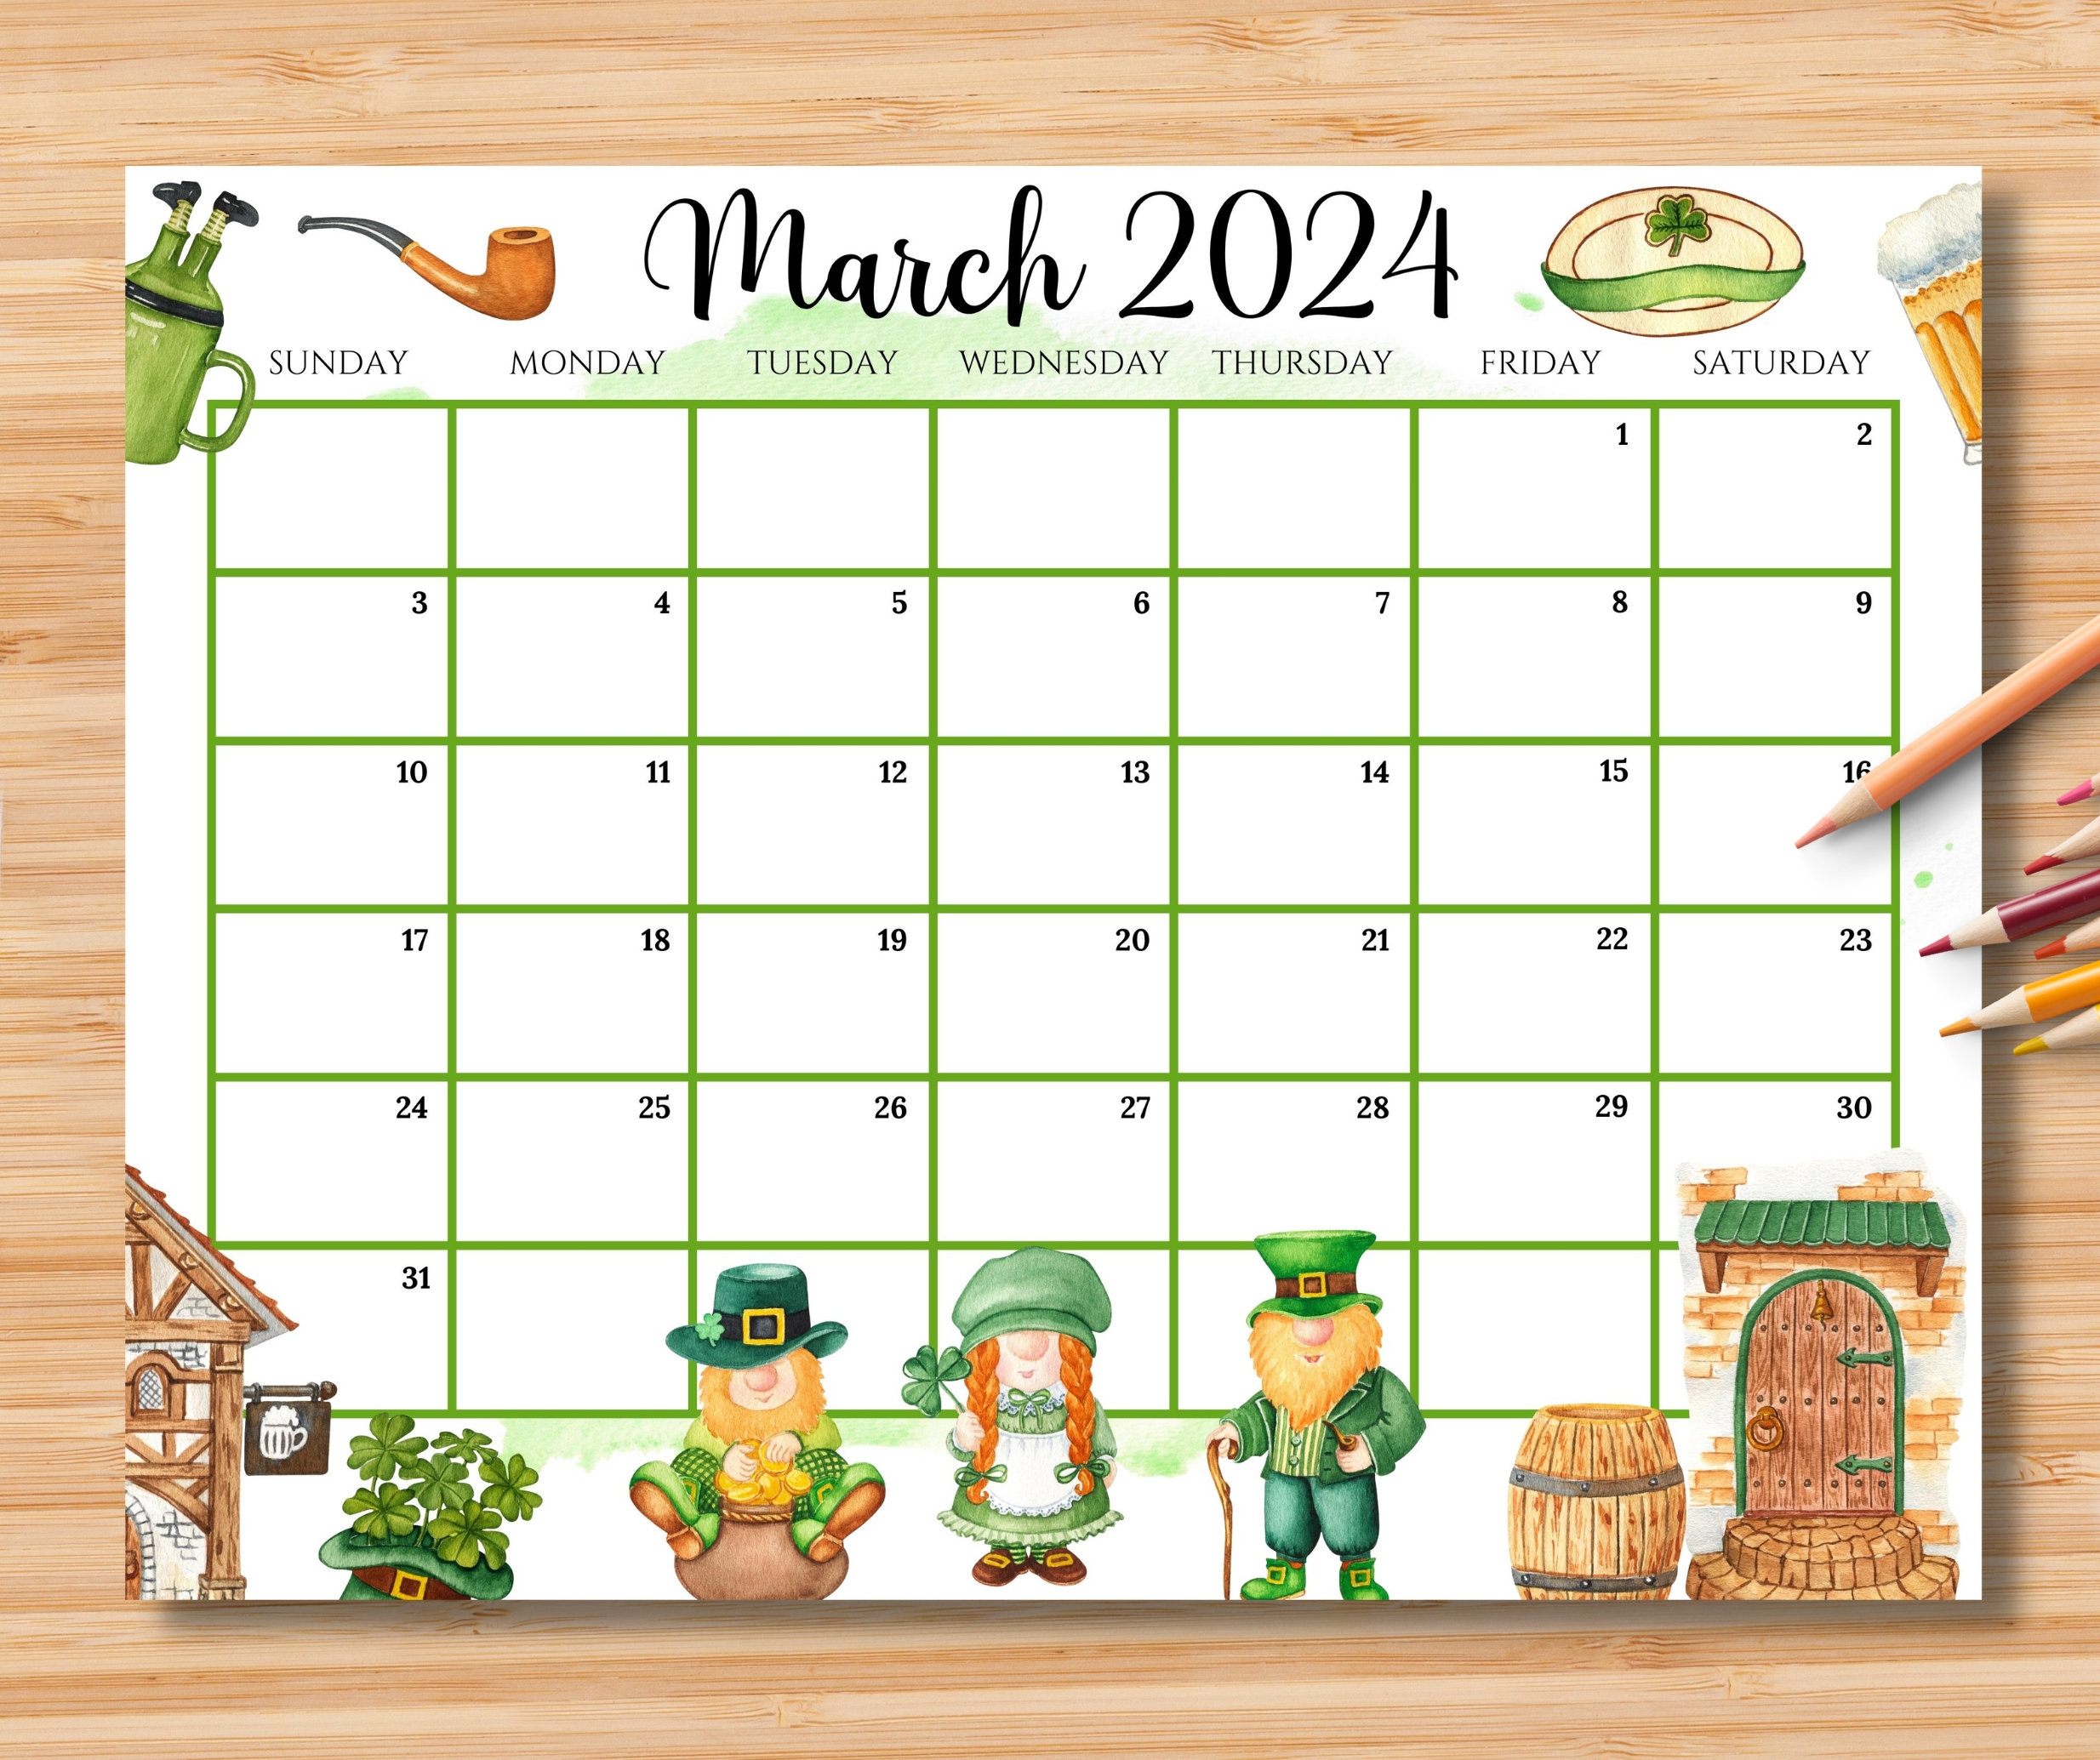 March 2024 Calendar Wallpapers Wallpaper Cave